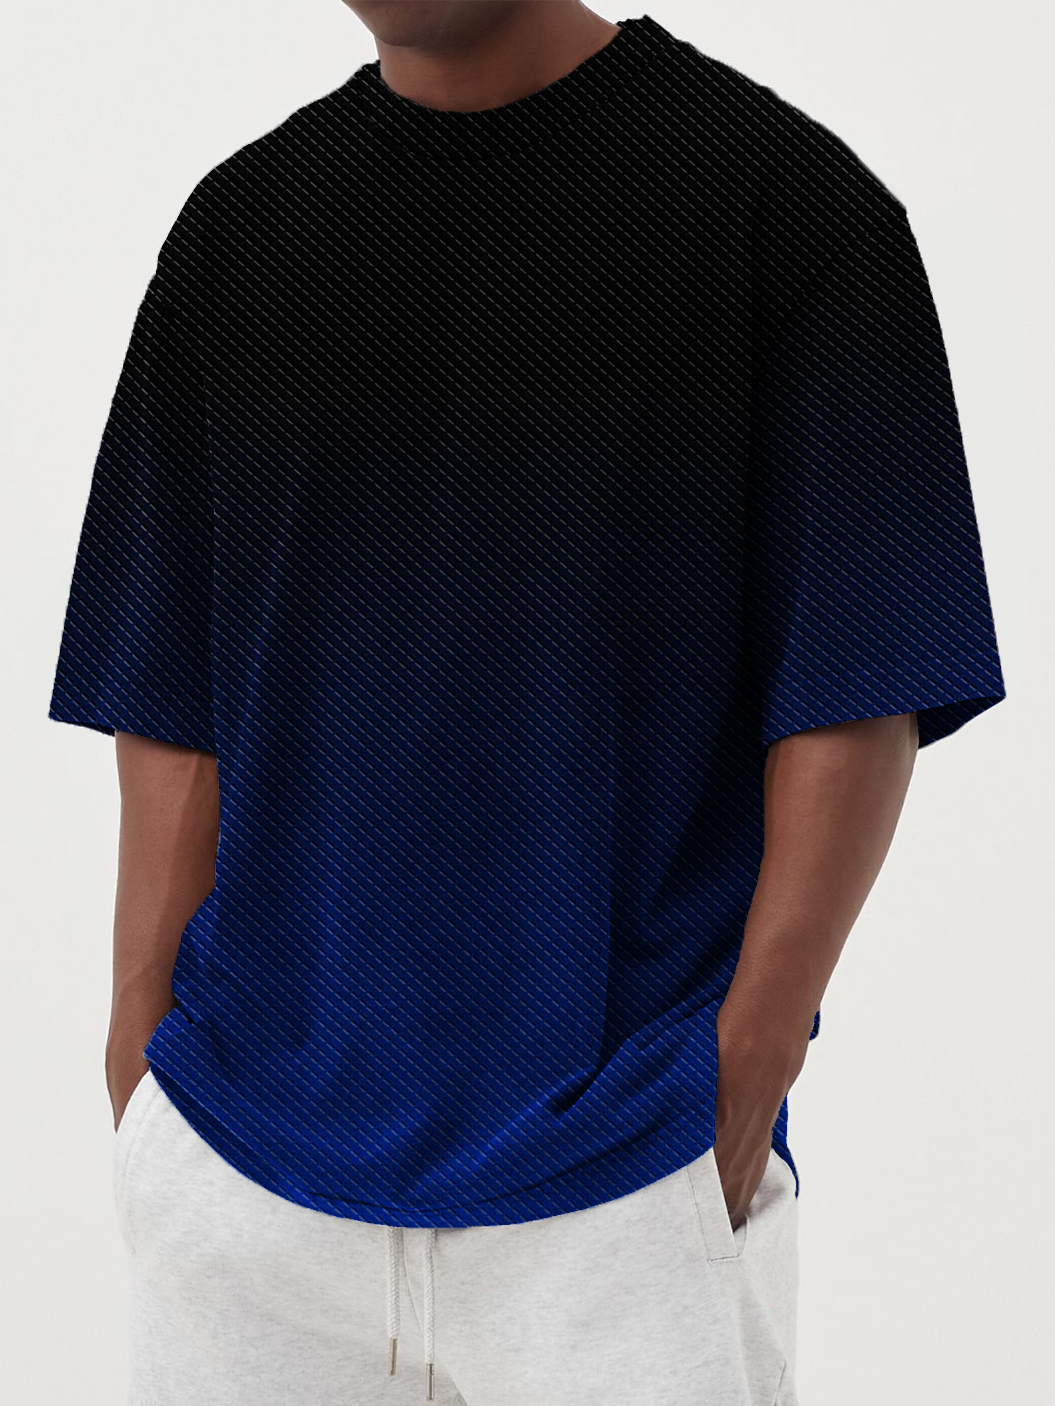 Men's Abstract Gradient Geometric T-Shirt Top